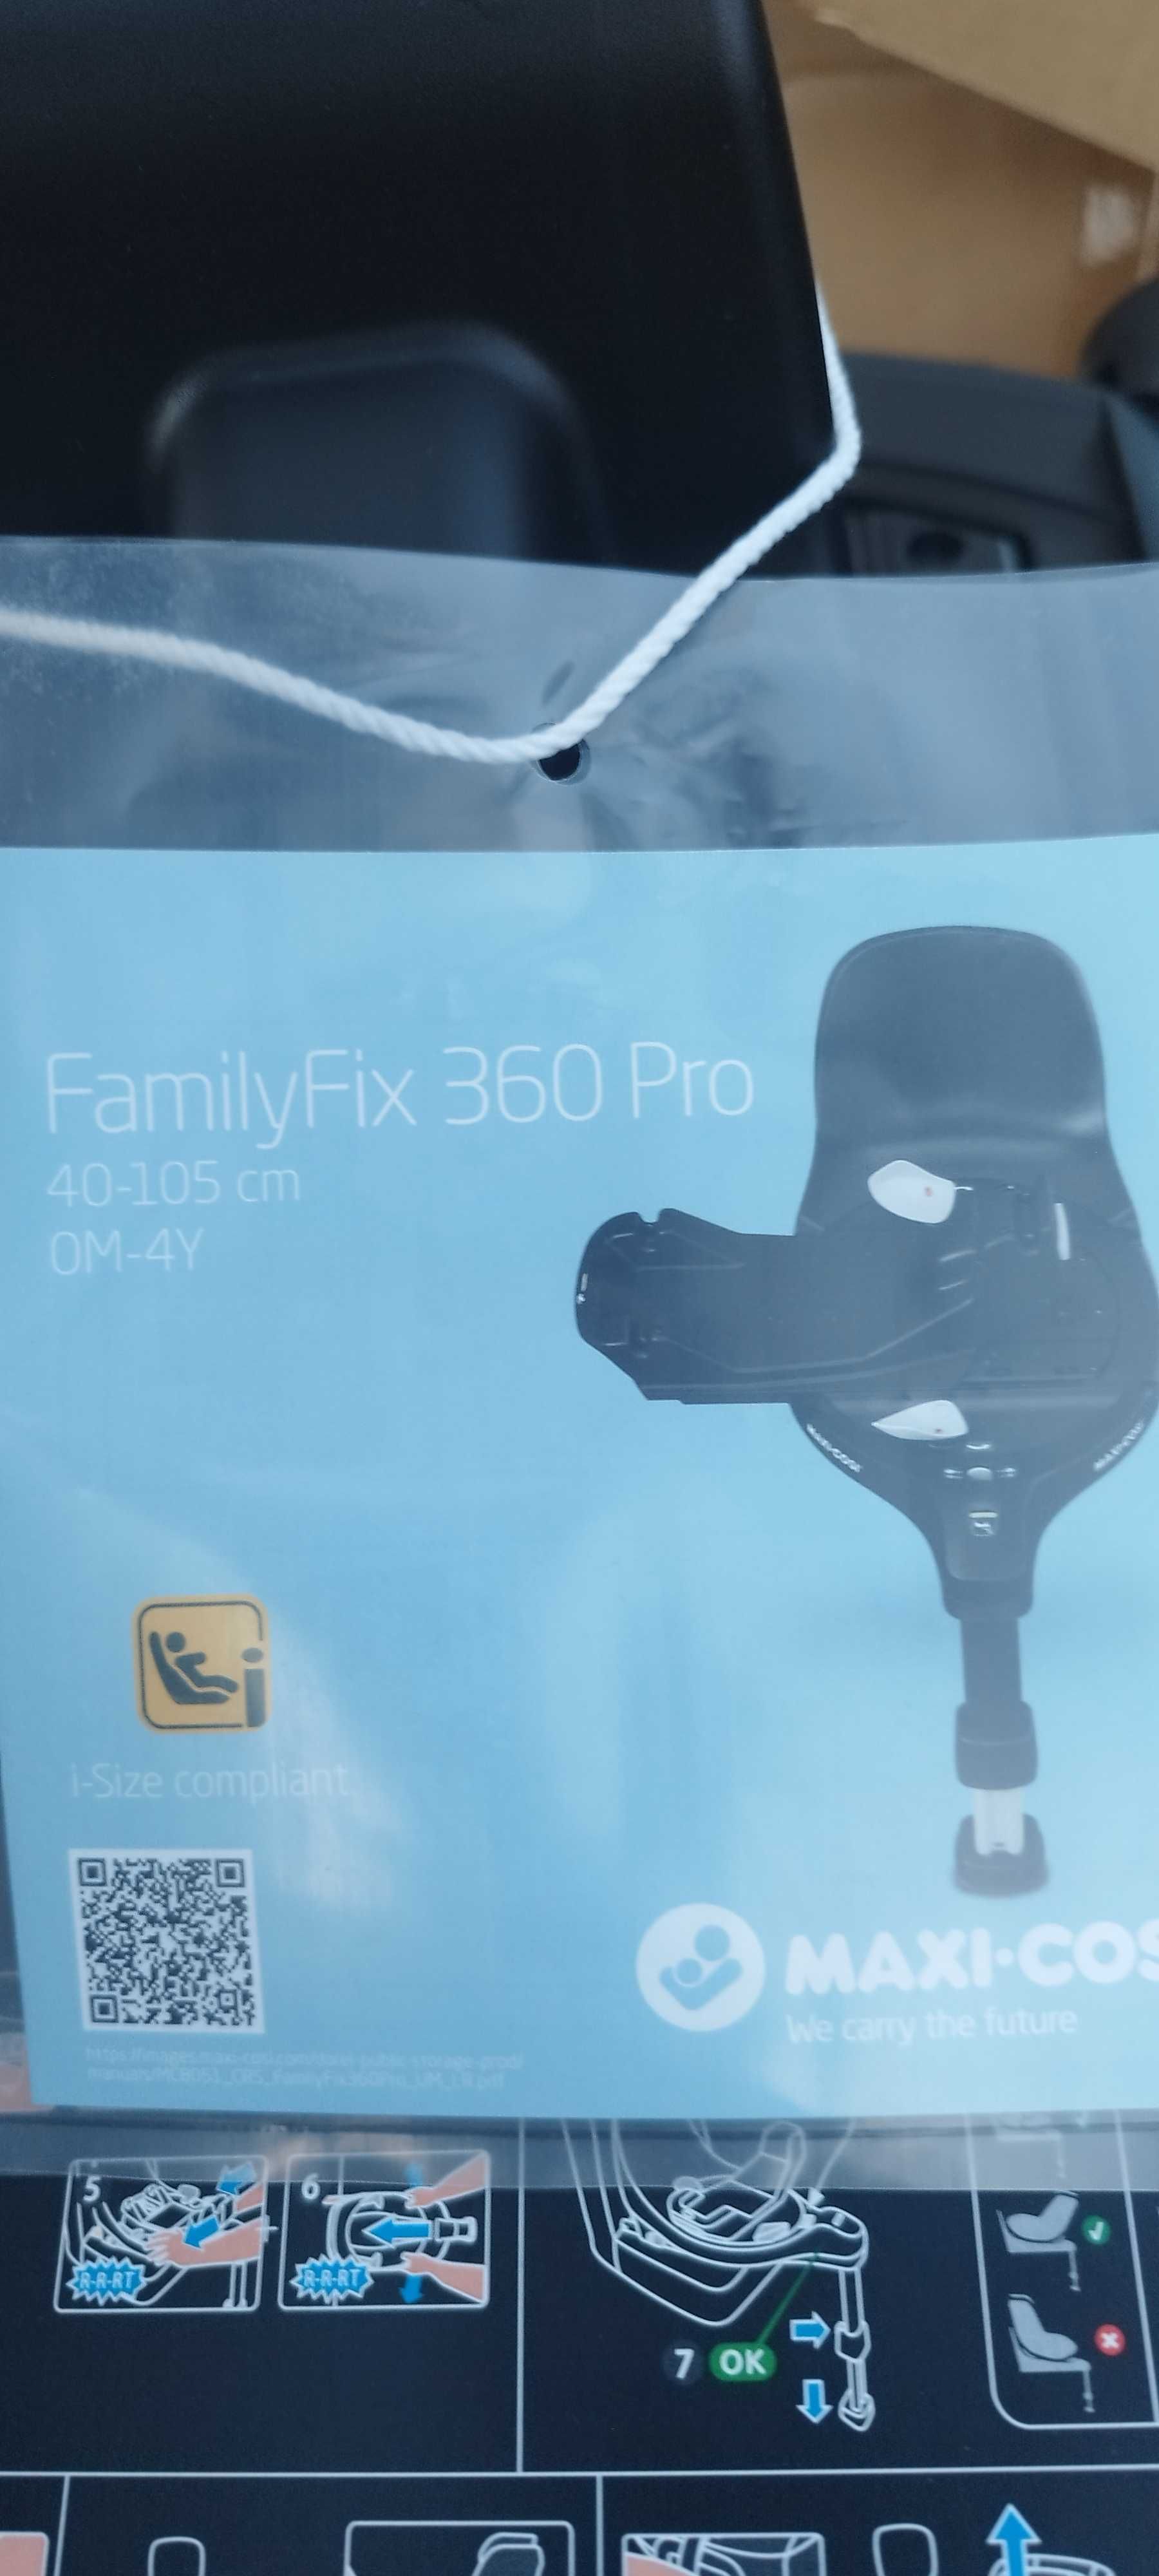 Maxi Cosi Family Fix 360 Pro